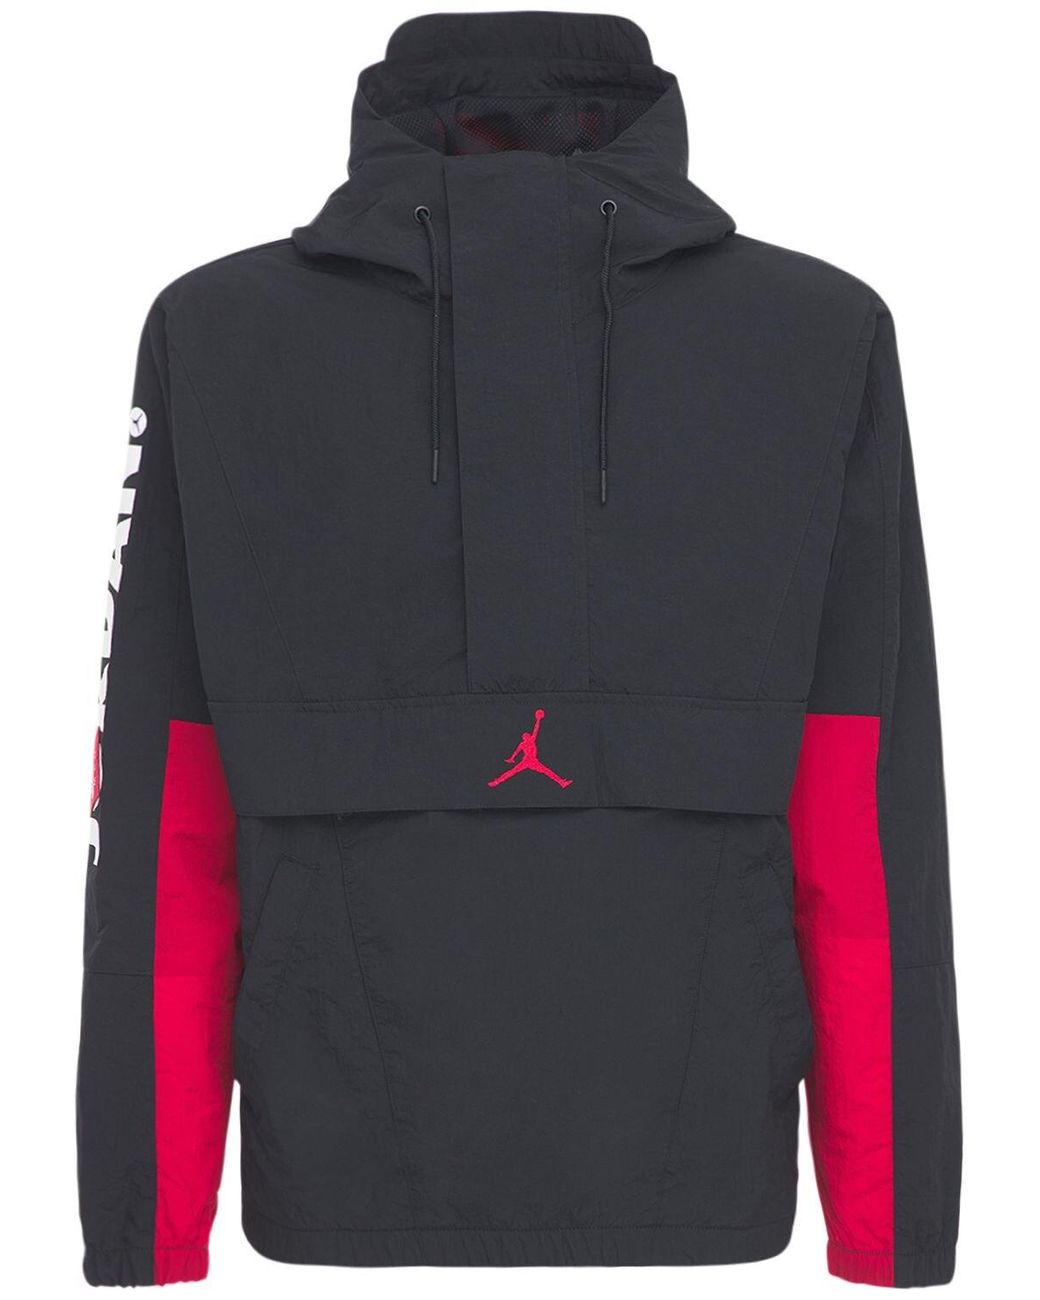 Nike Jordan Jumpman Hooded Jacket in Black for Men - Lyst